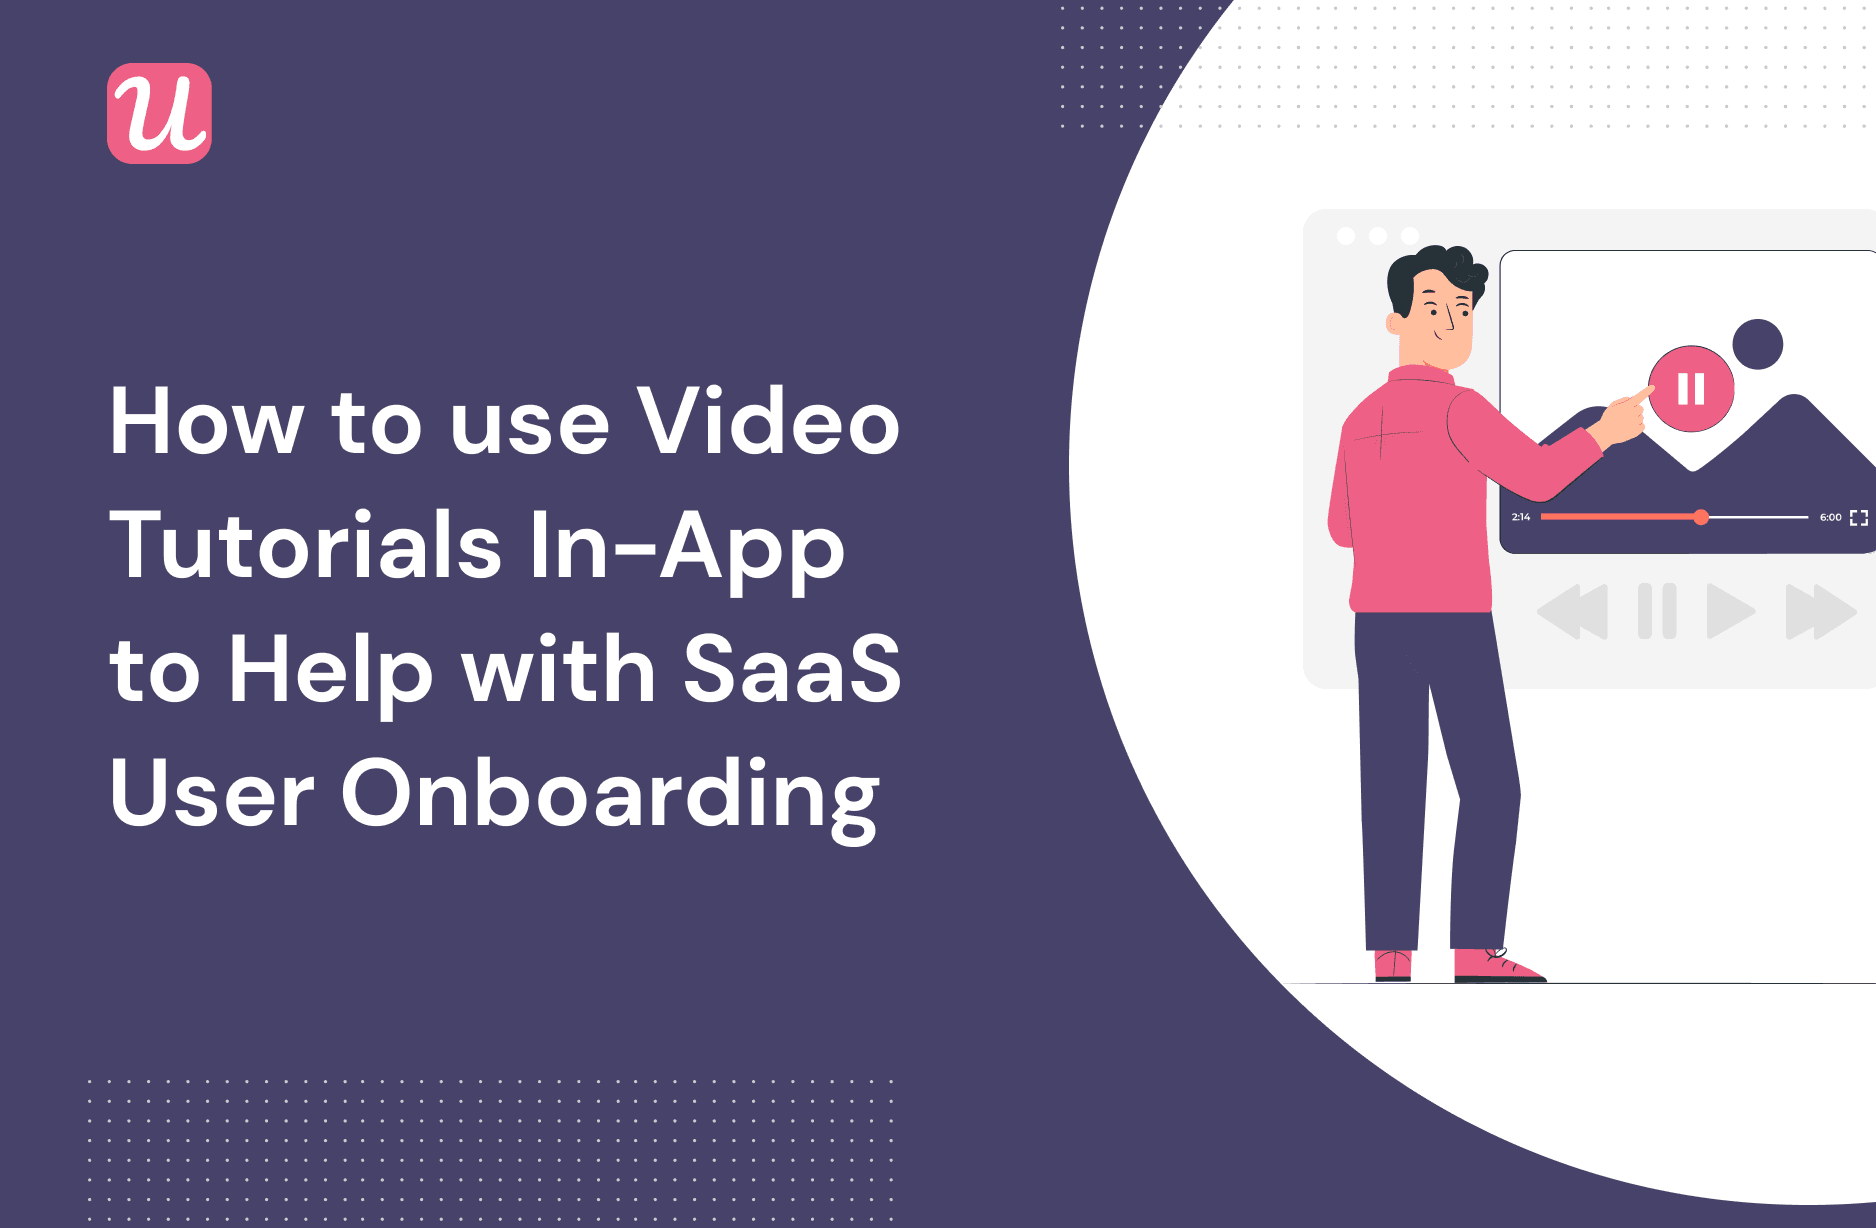 Video tutorial in-app – how to use video tutorials in-app to help with SaaS user onboarding